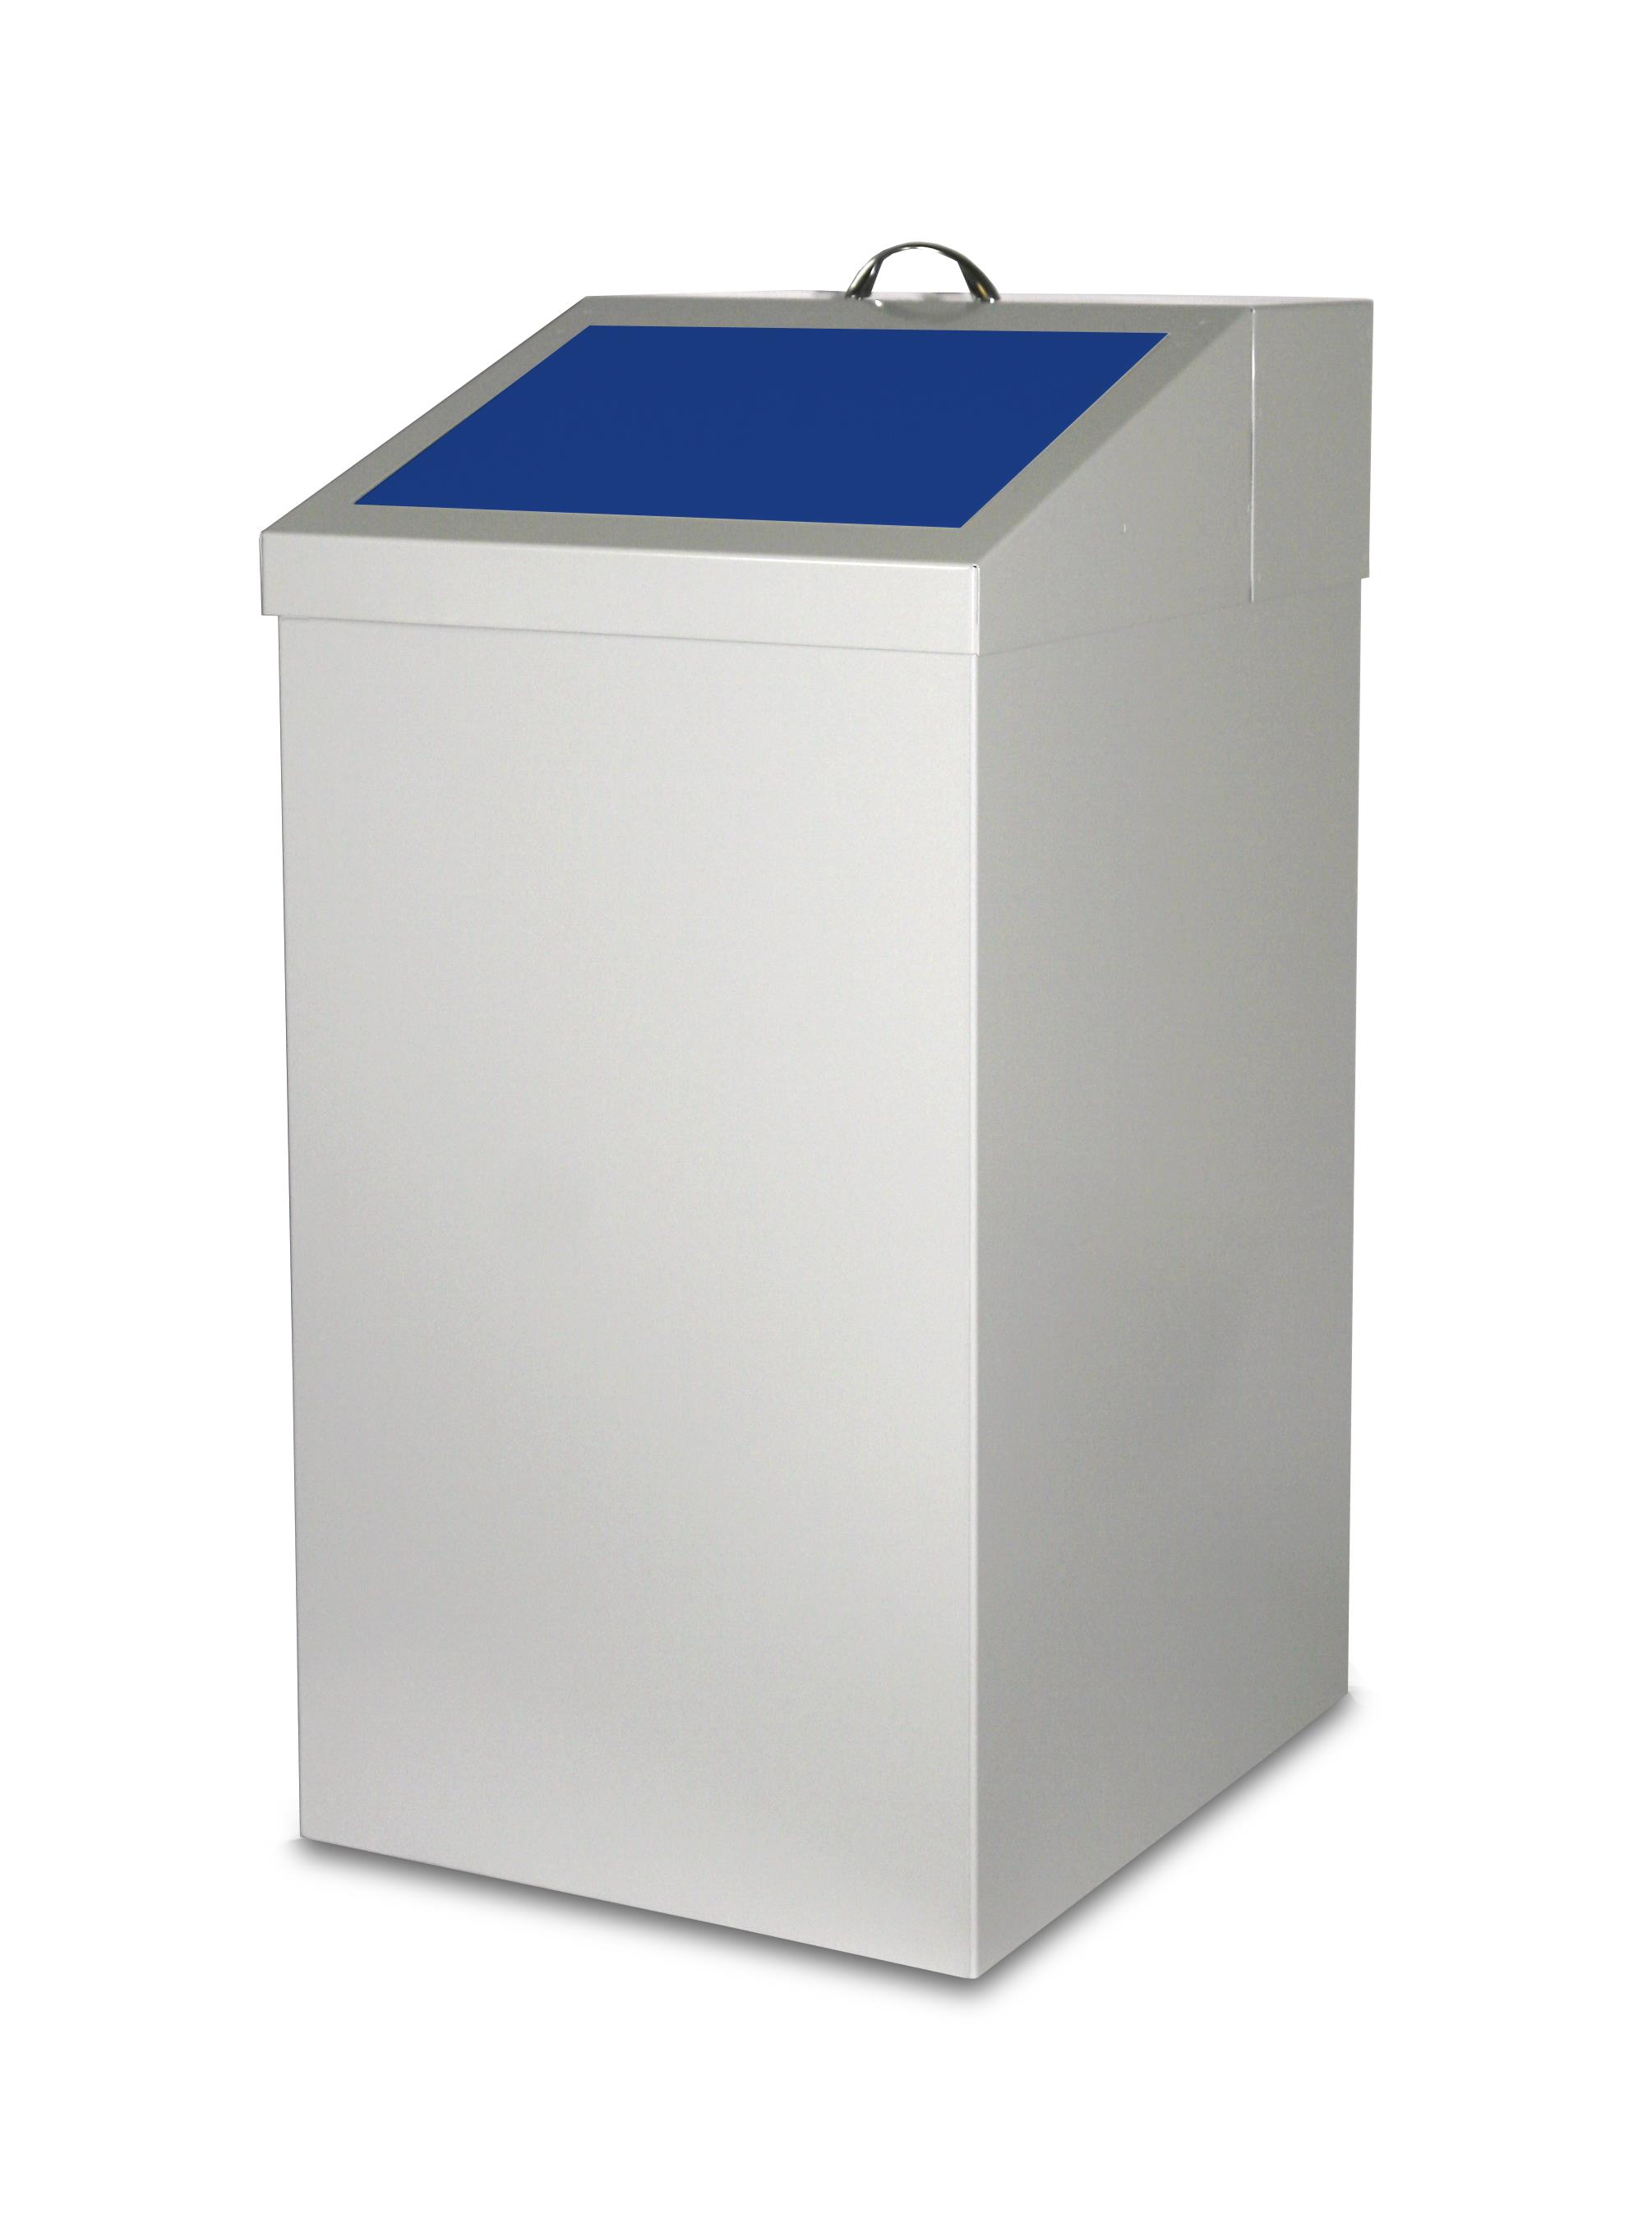 SZAGATO Abfallbehälter 54 ltr. HxBxT 65x34x38cm blau kaufen